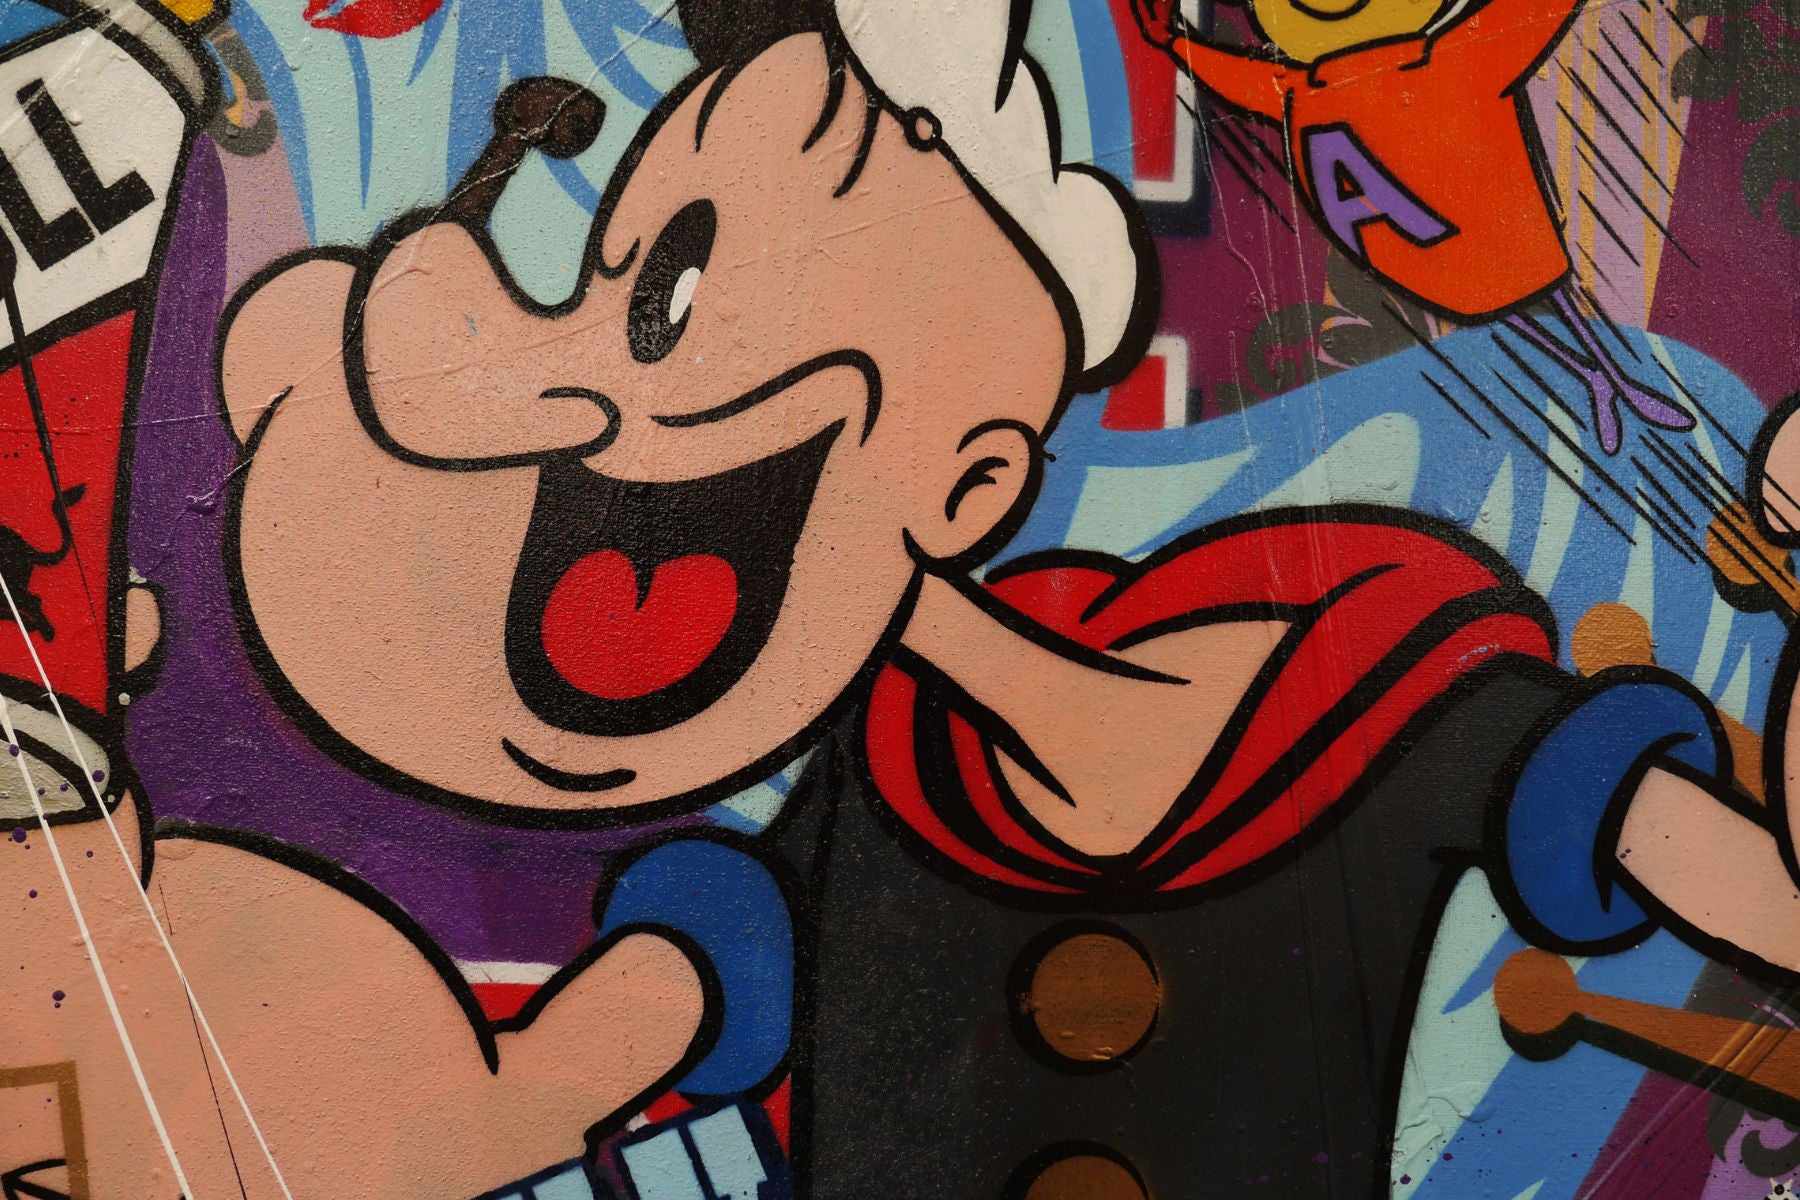 I Yam (Popeye) 190cm x 100cm Popeye Textured Urban Pop Art Painting (SOLD)